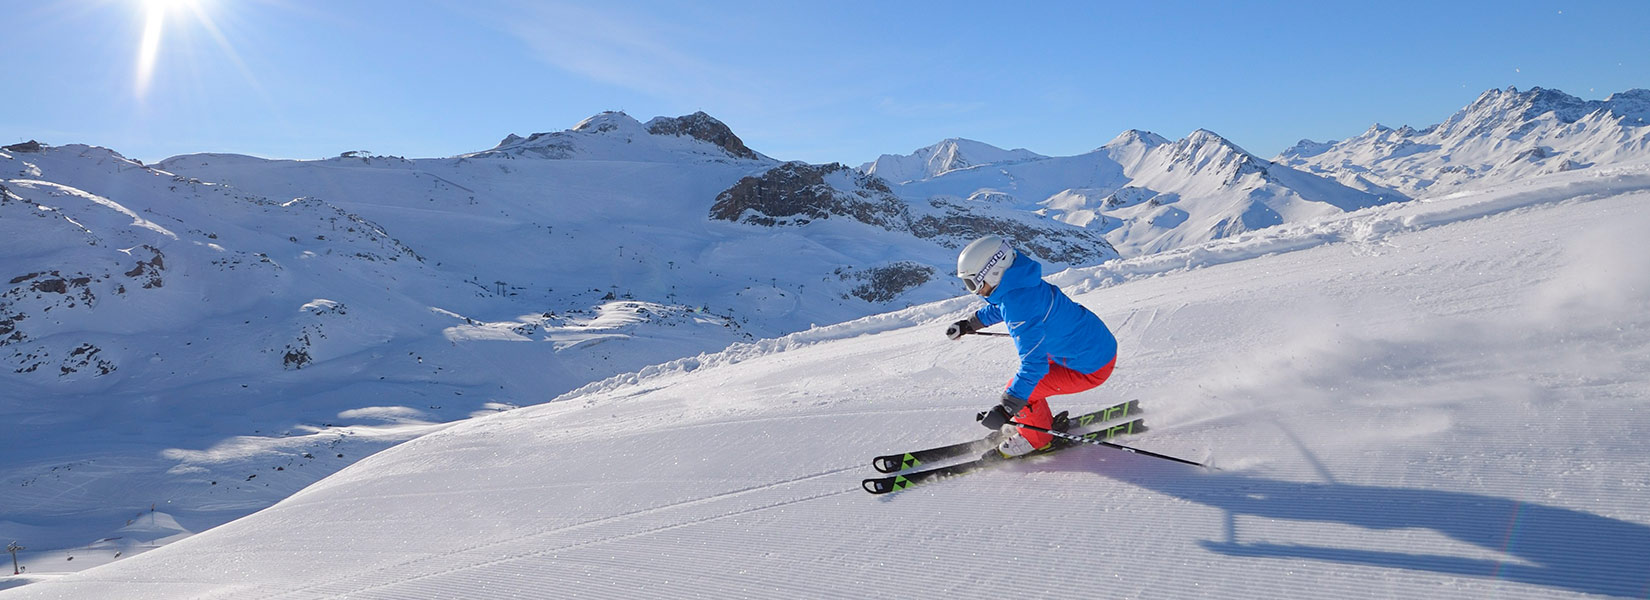 5_skigebiet-josef_mallaun_tvb_paznaun_ischgl